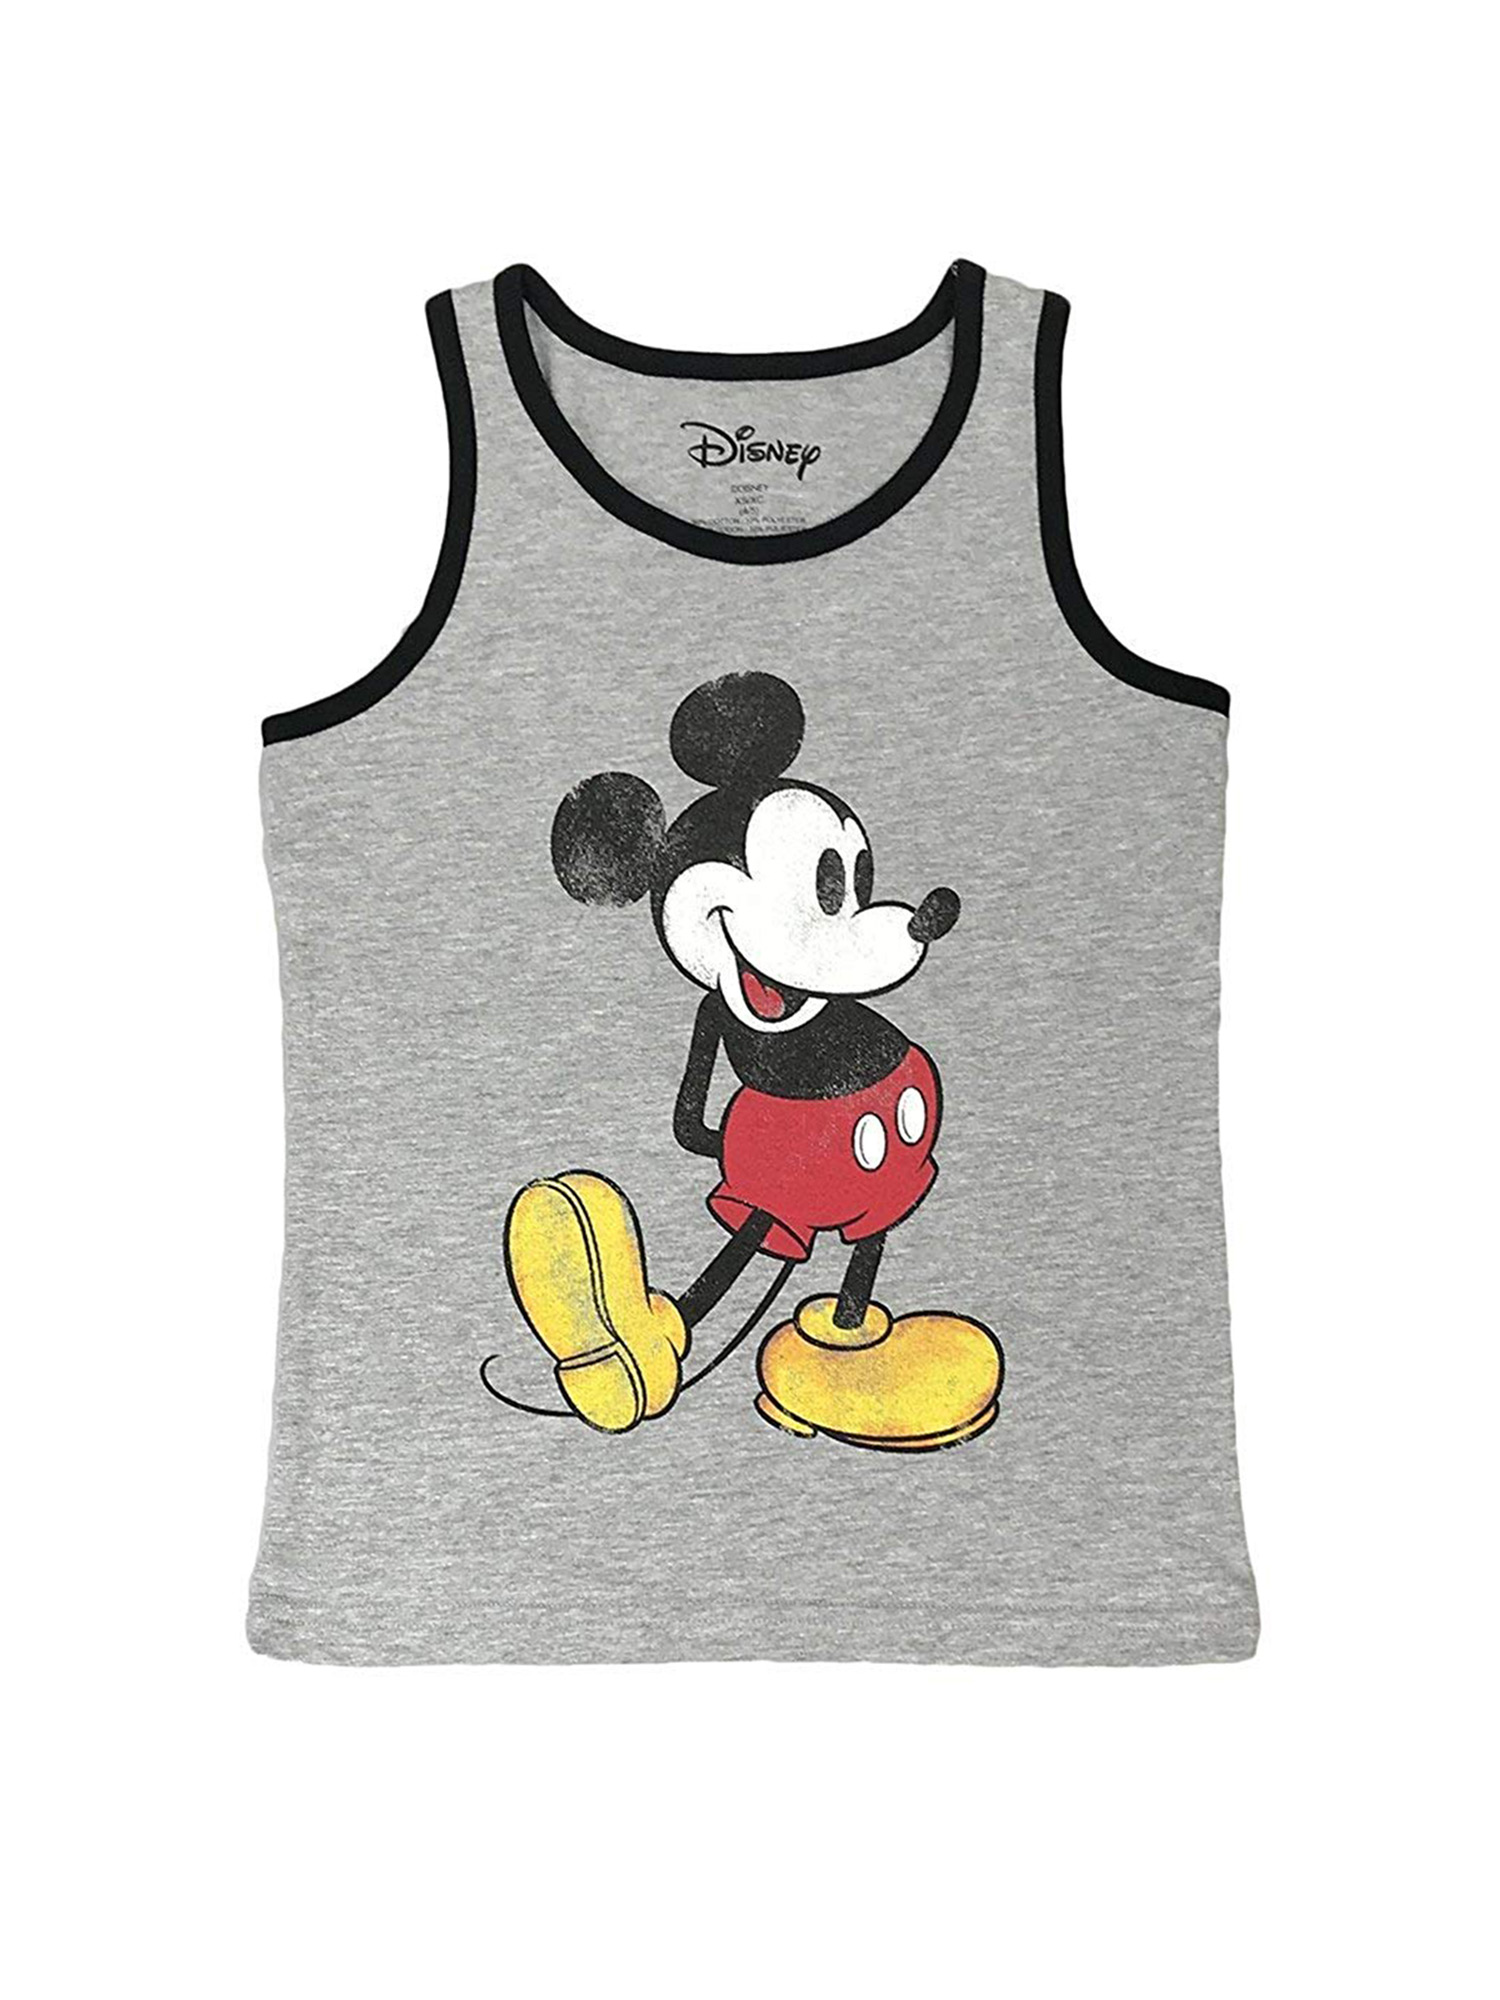 Disney Mickey Mouse Ringer Tank Top Shirt Heather Gray (Big Boys) - image 1 of 1